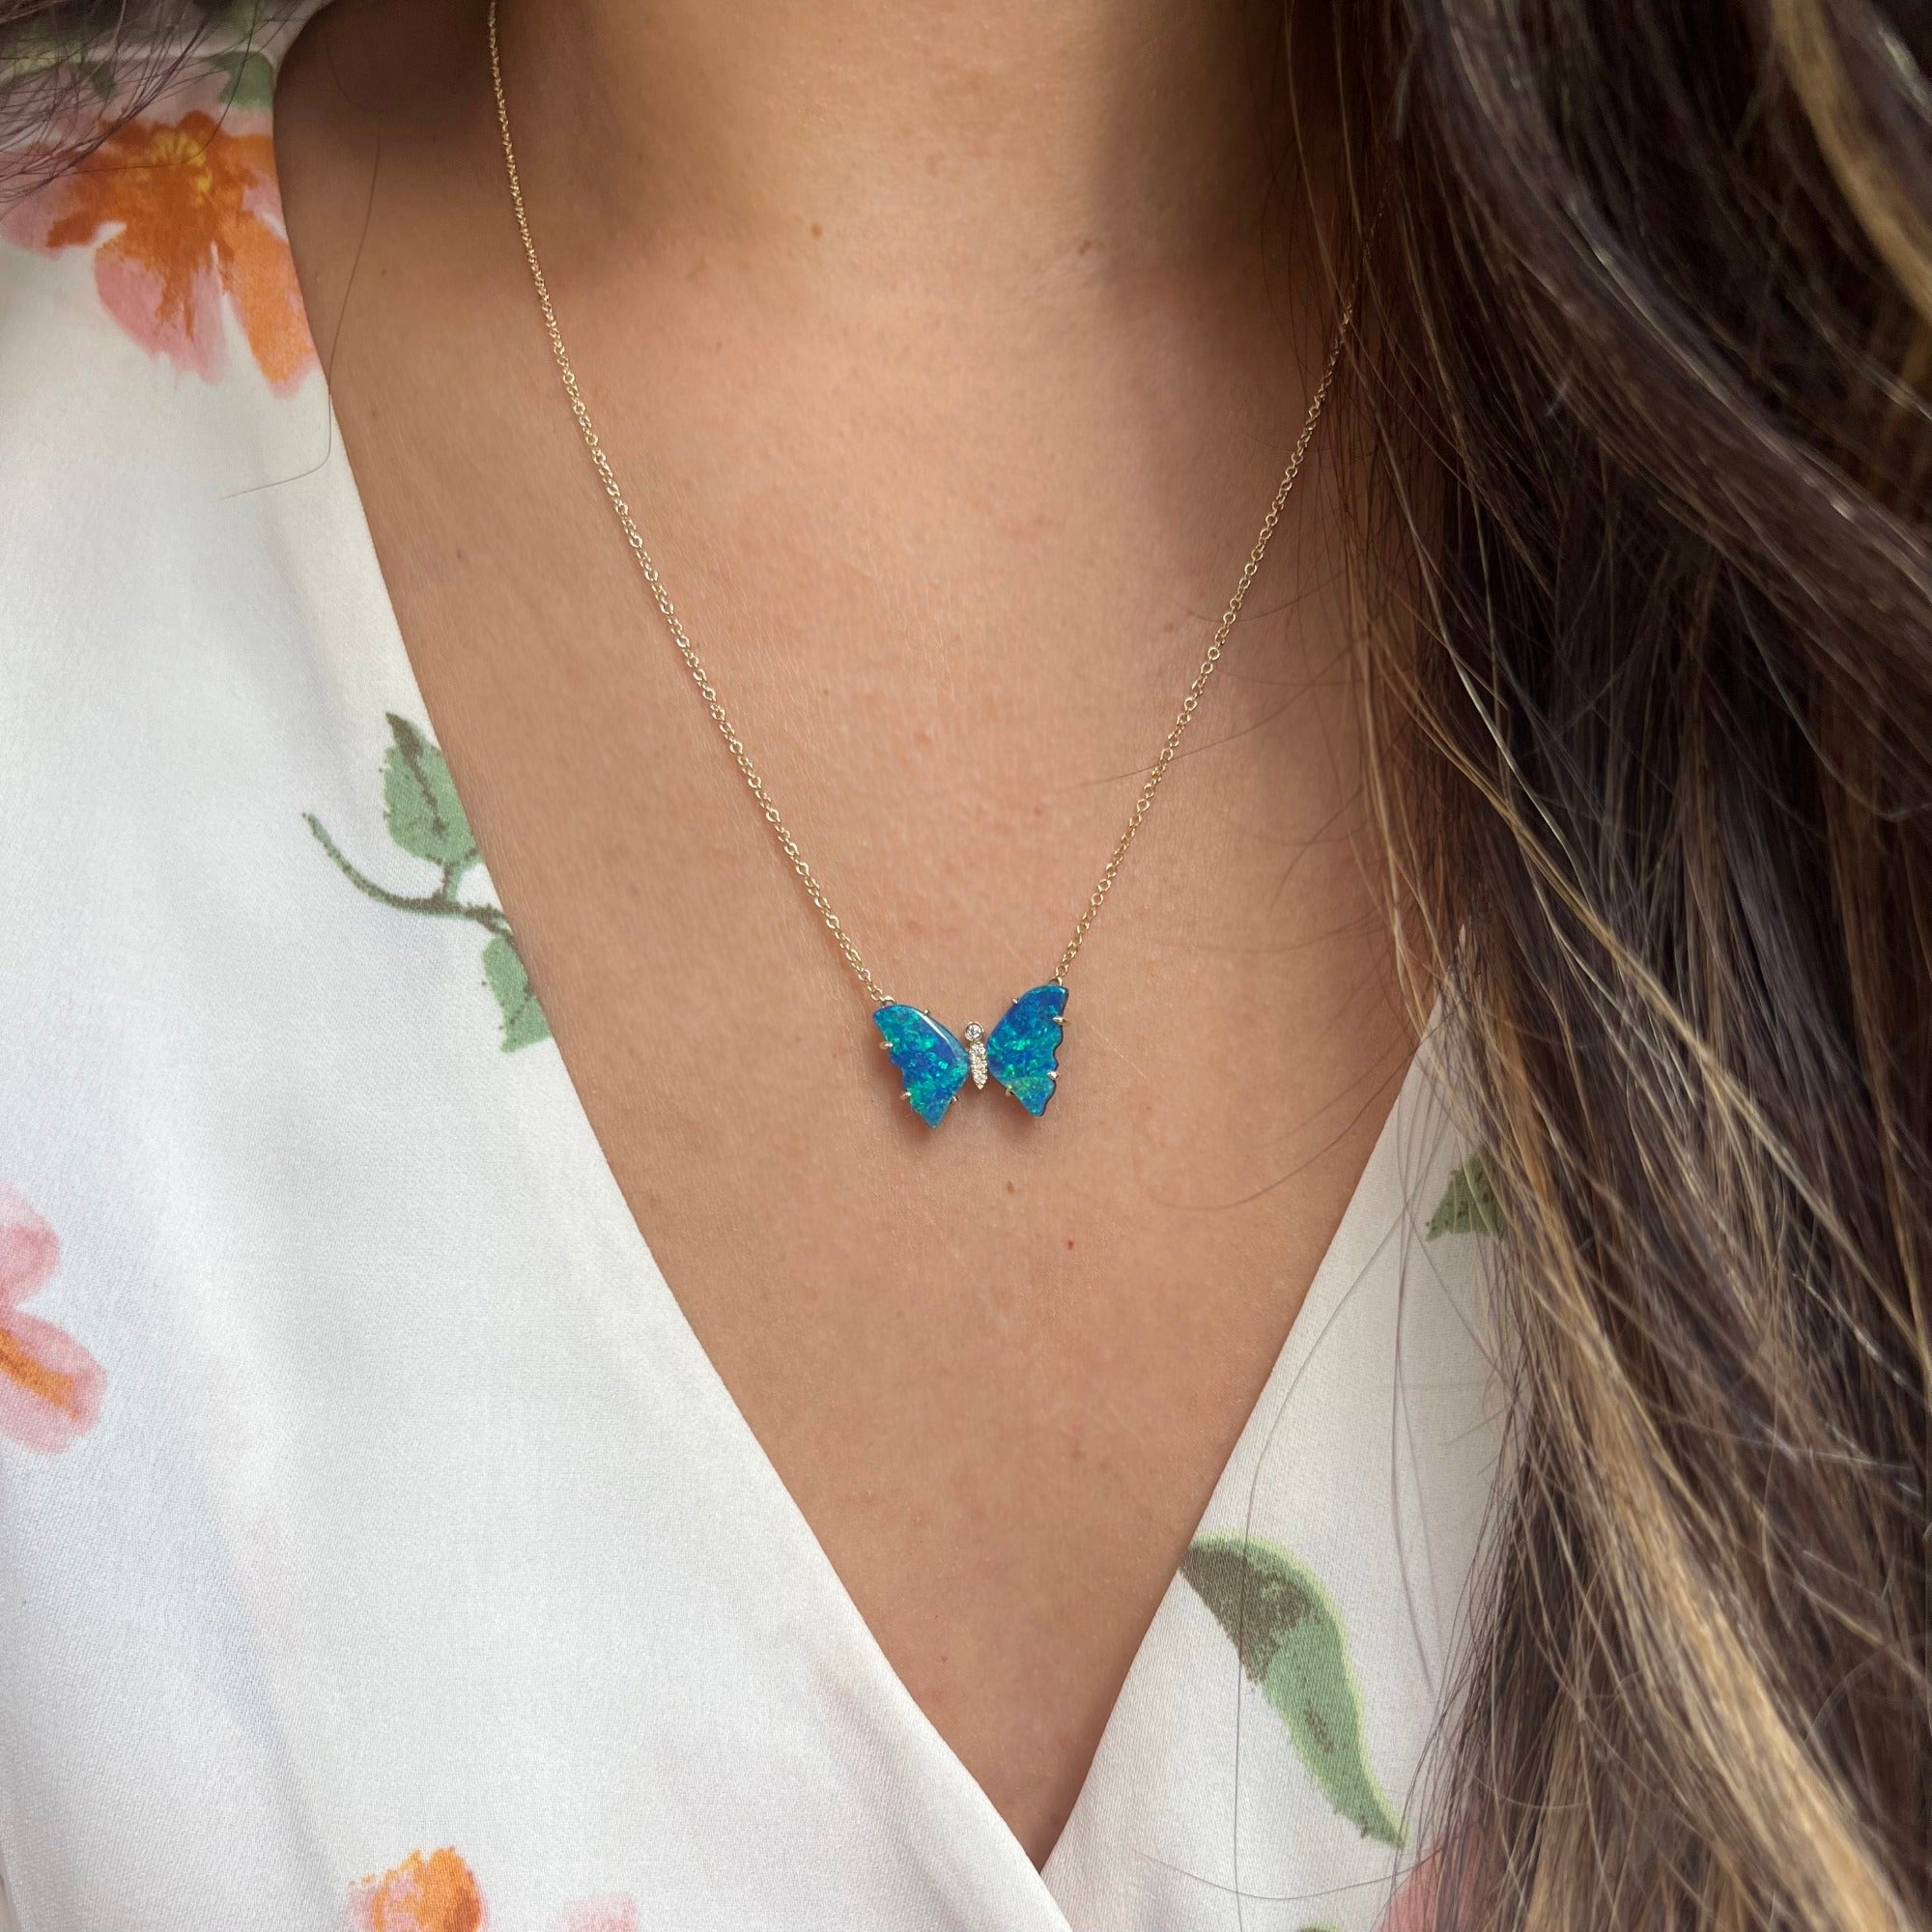 Mini pronged butterfly necklace boulder opal blue ocean